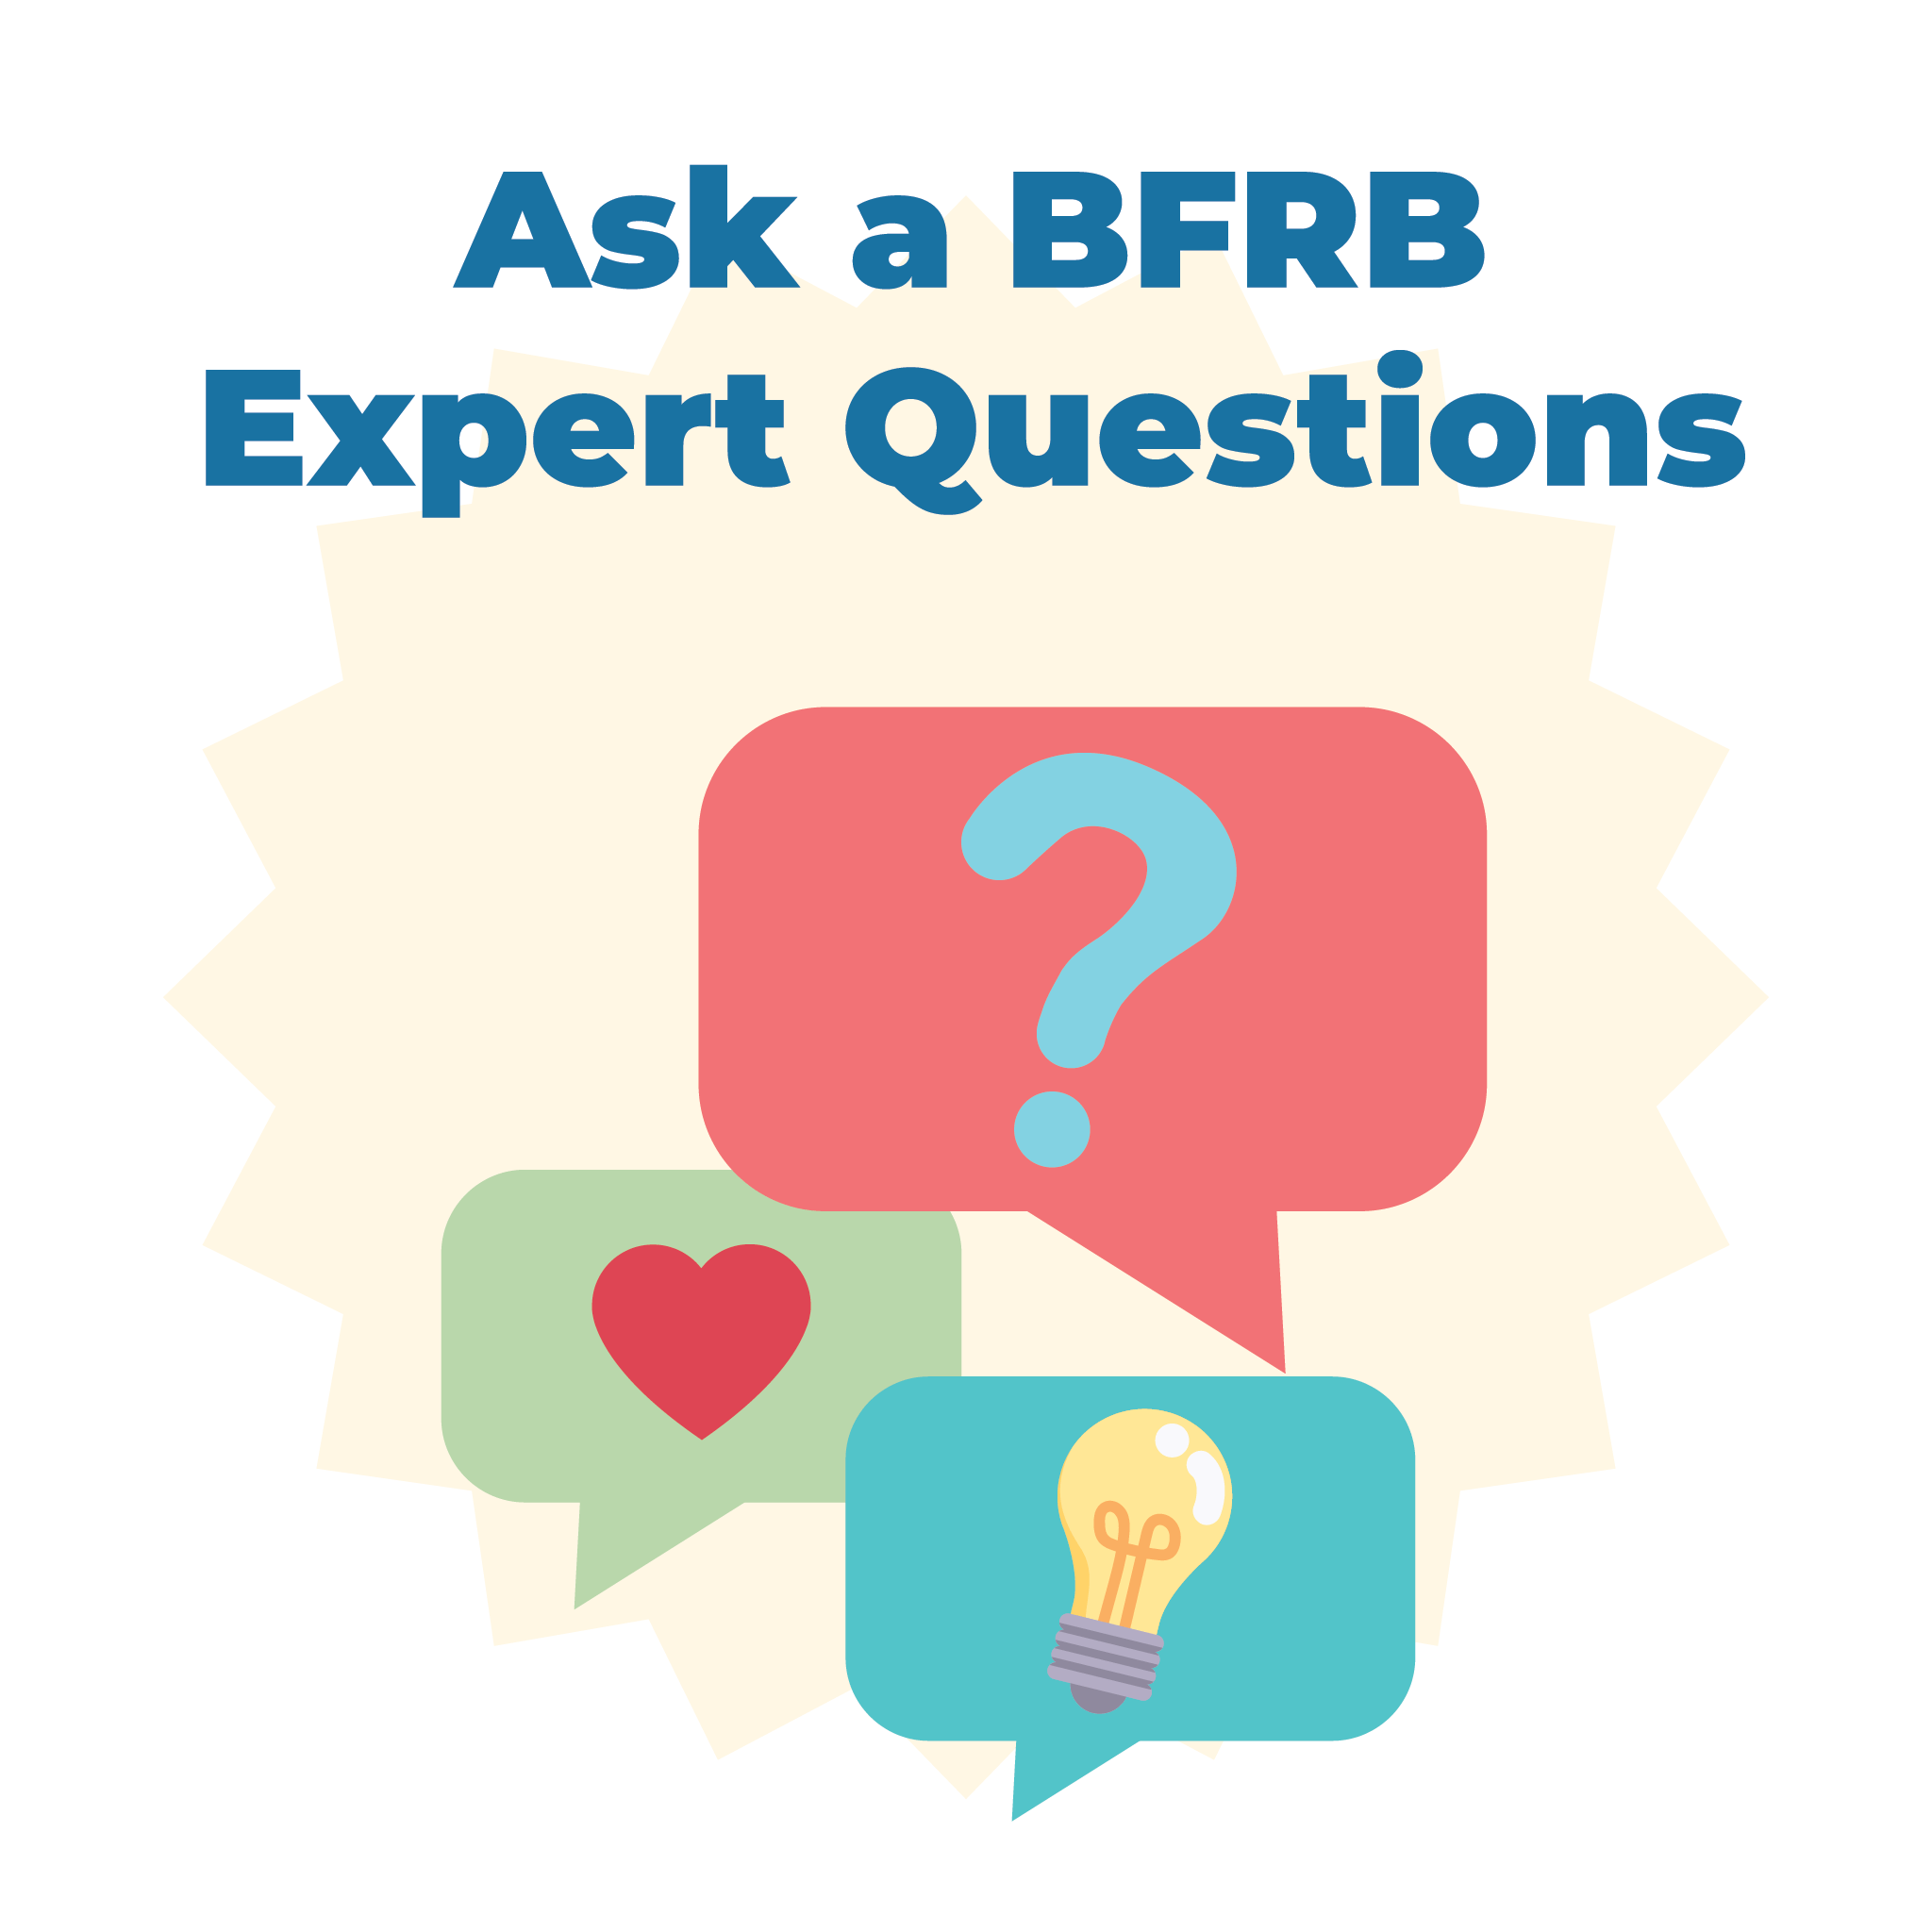 Ask a bfr expert questions.